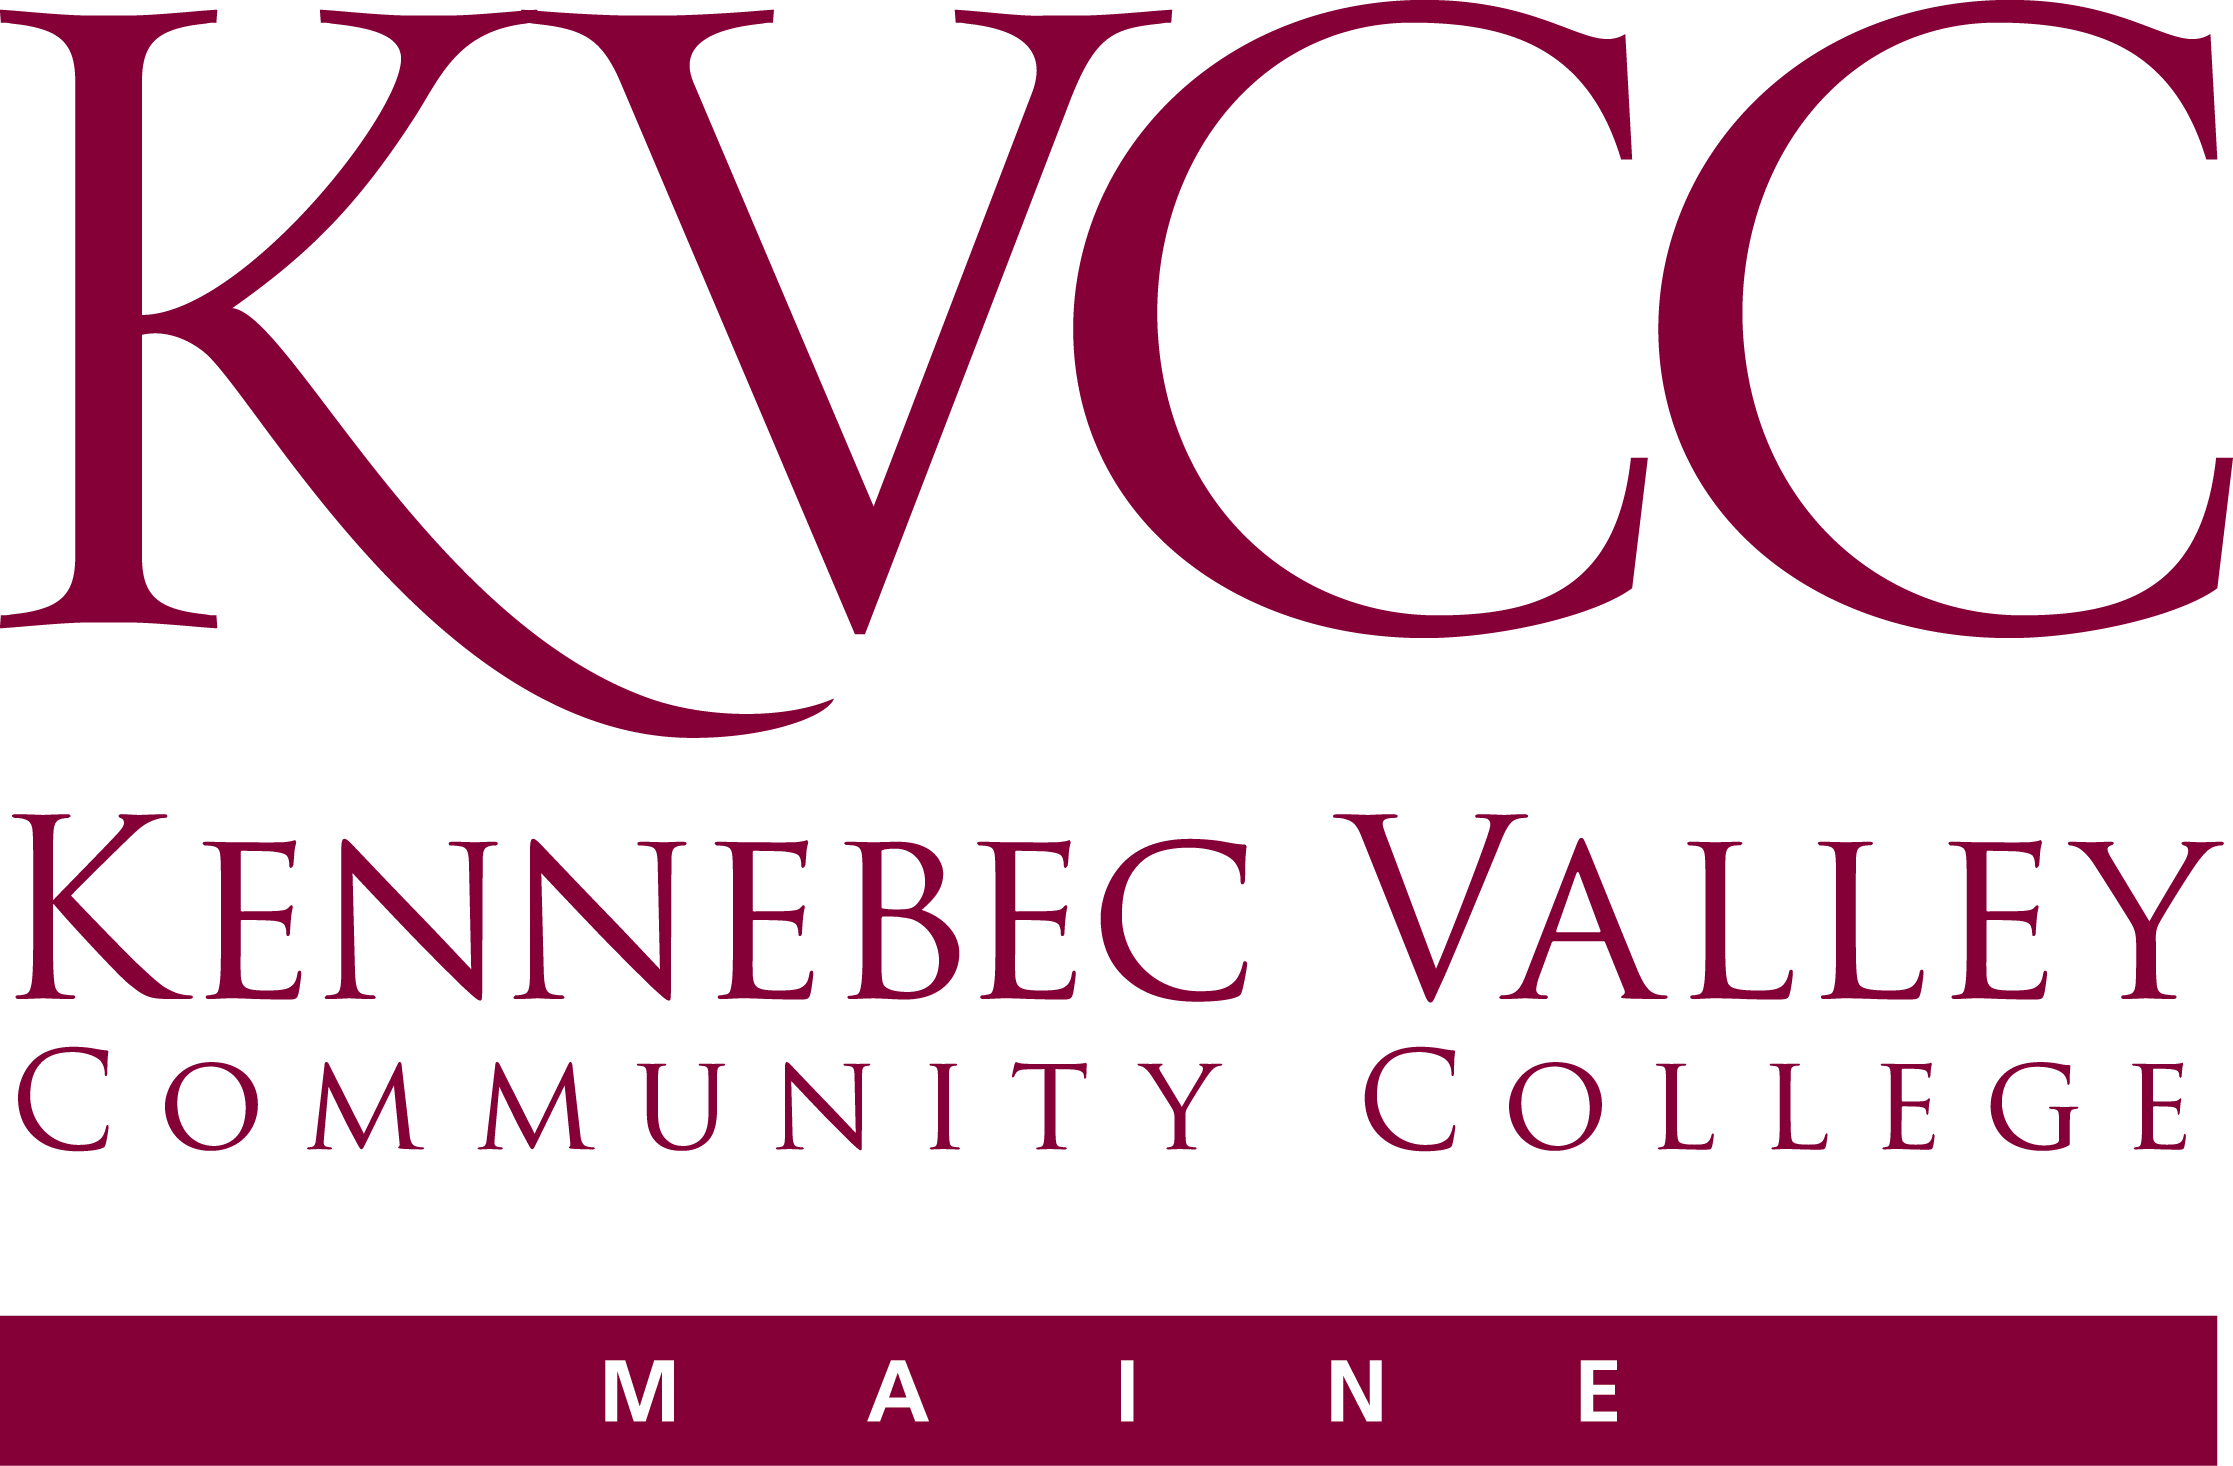 Kennebec Valley Community College logo